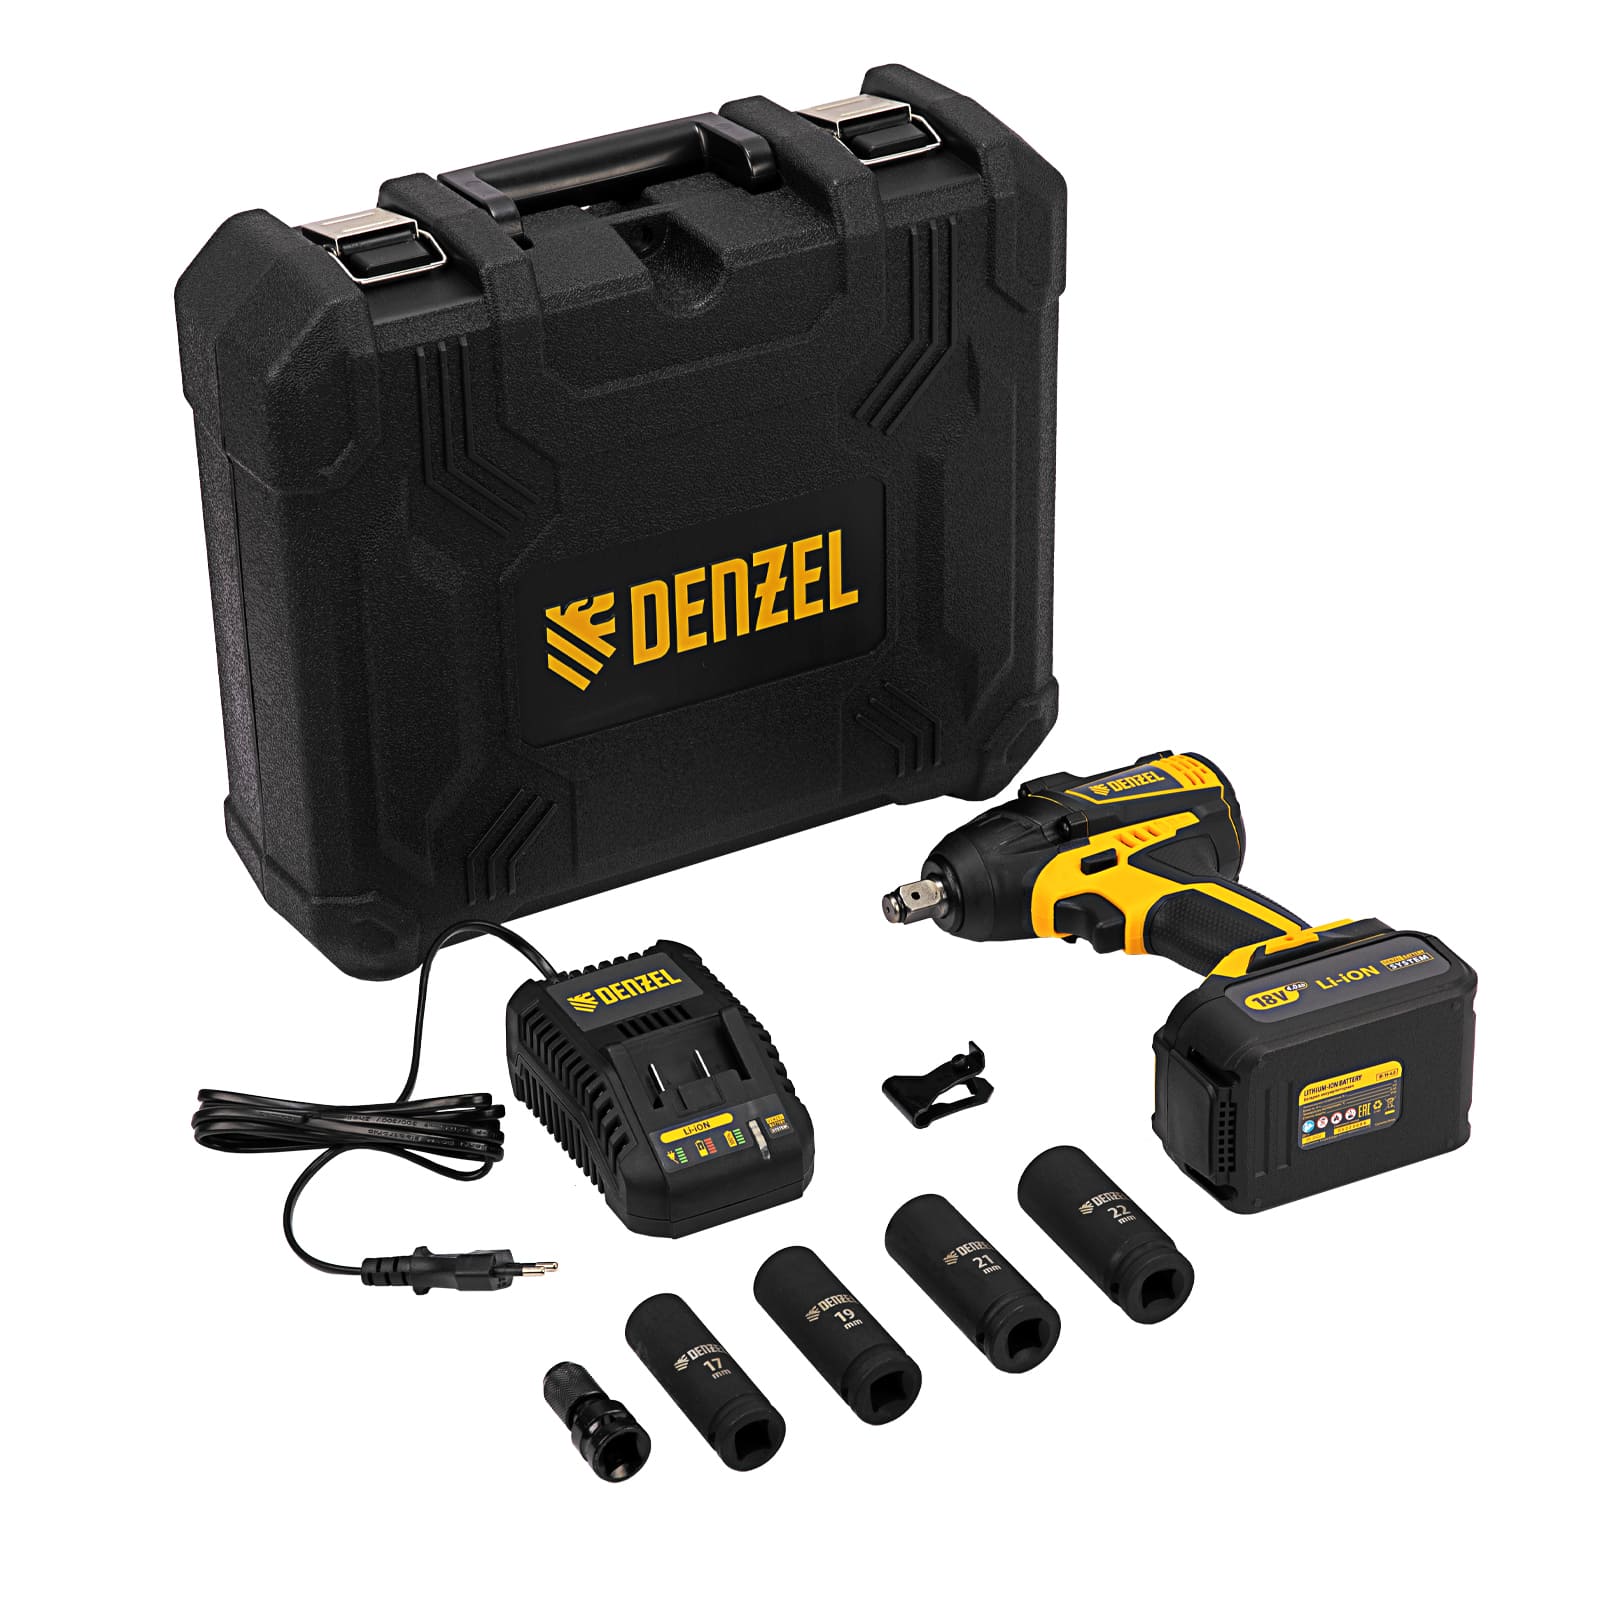 Аккумуляторный гайковёрт DENZEL CIW-IB-300 (аккум. система Denzel Battery System 18V, бесщёточный, ударный)